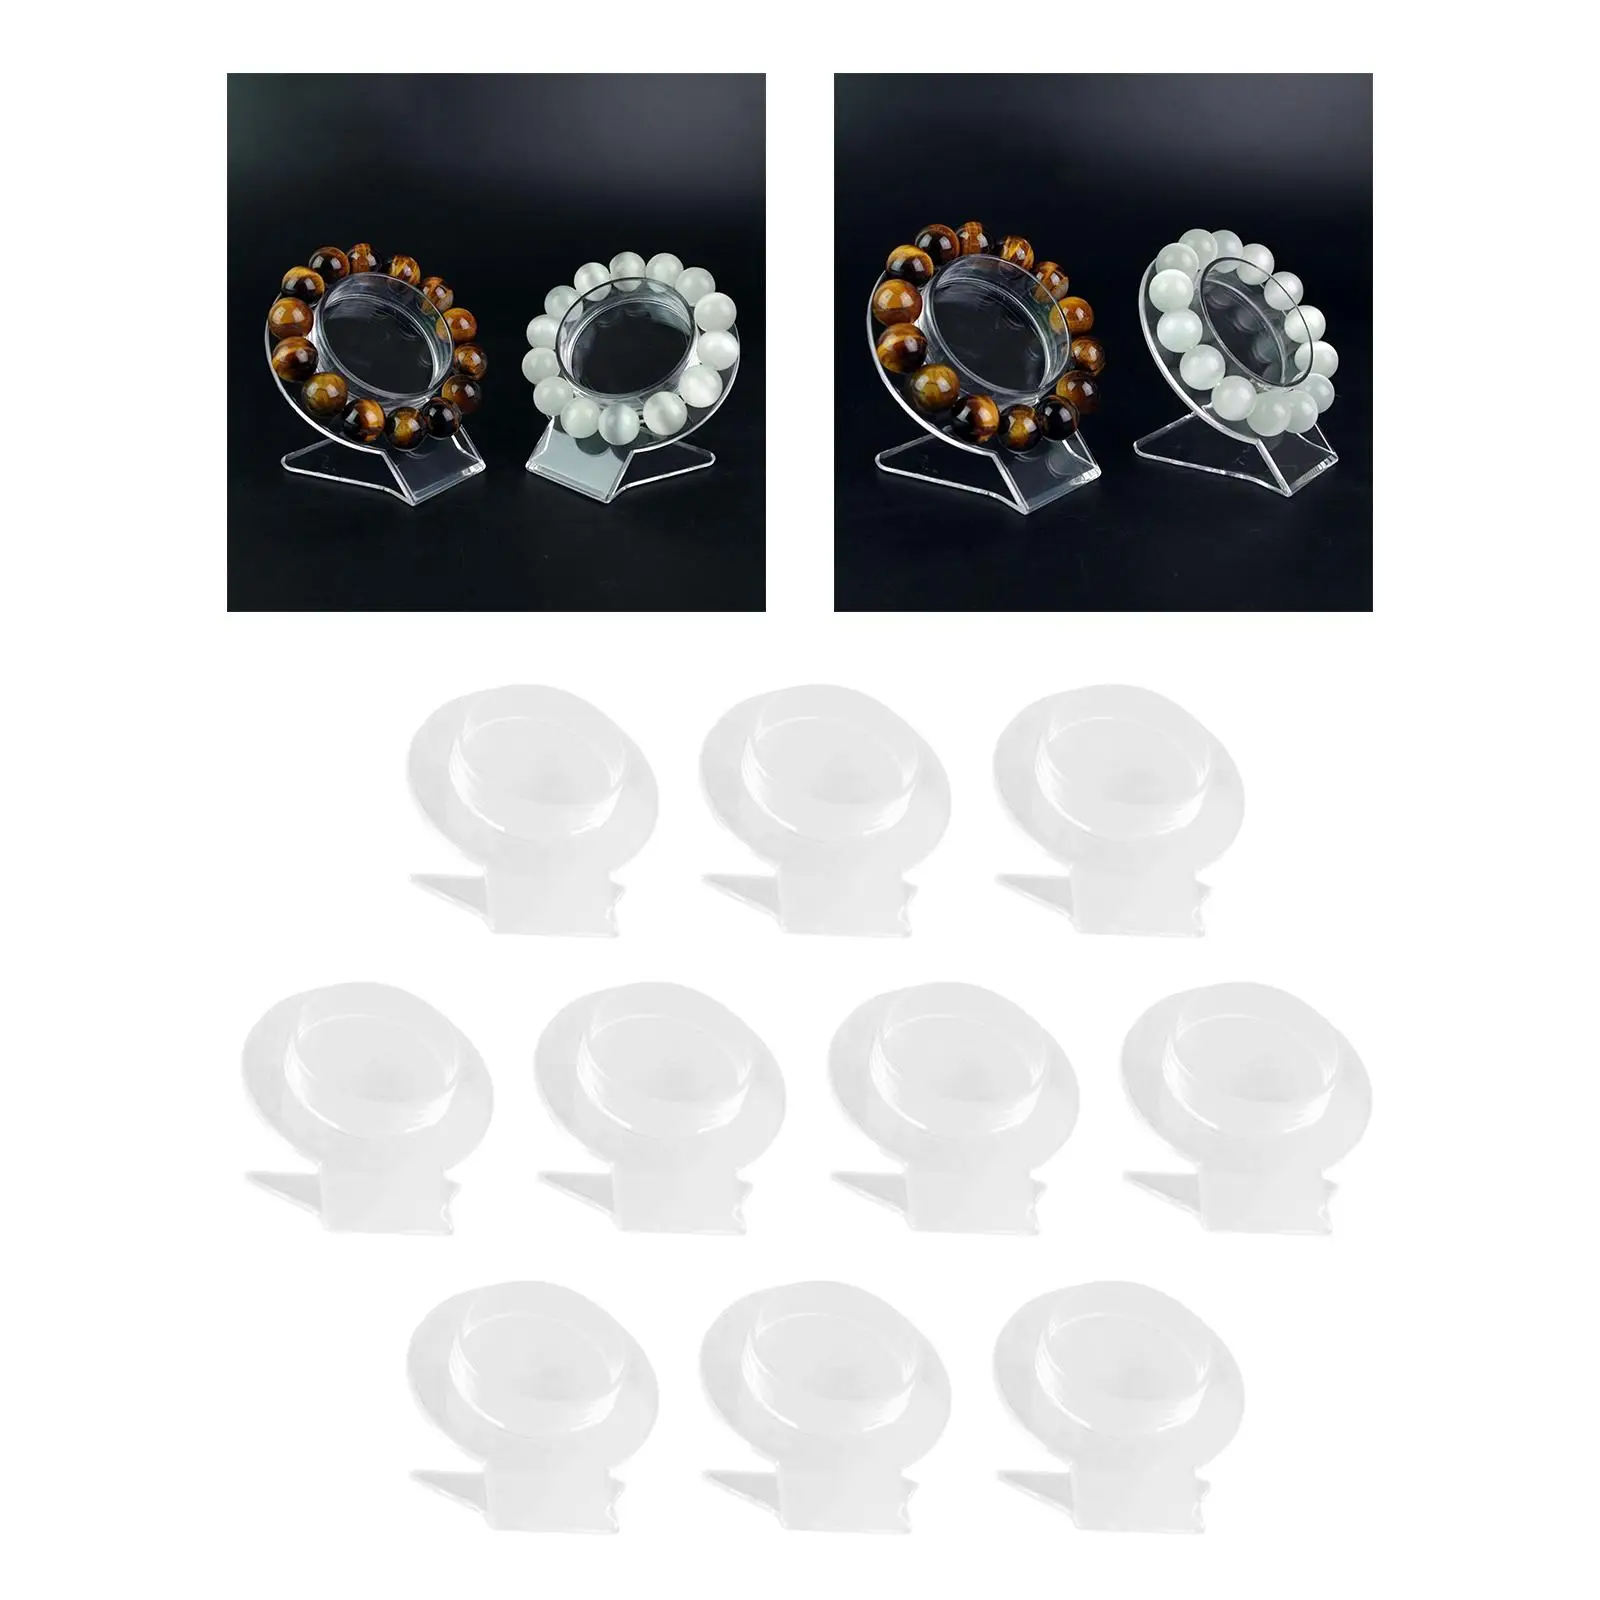 10Pcs Clear Acrylic Bracelet Displays Stands Jewelry Organizer Rack Showcase Bracelet Holder for Store Retail Shop Decoration